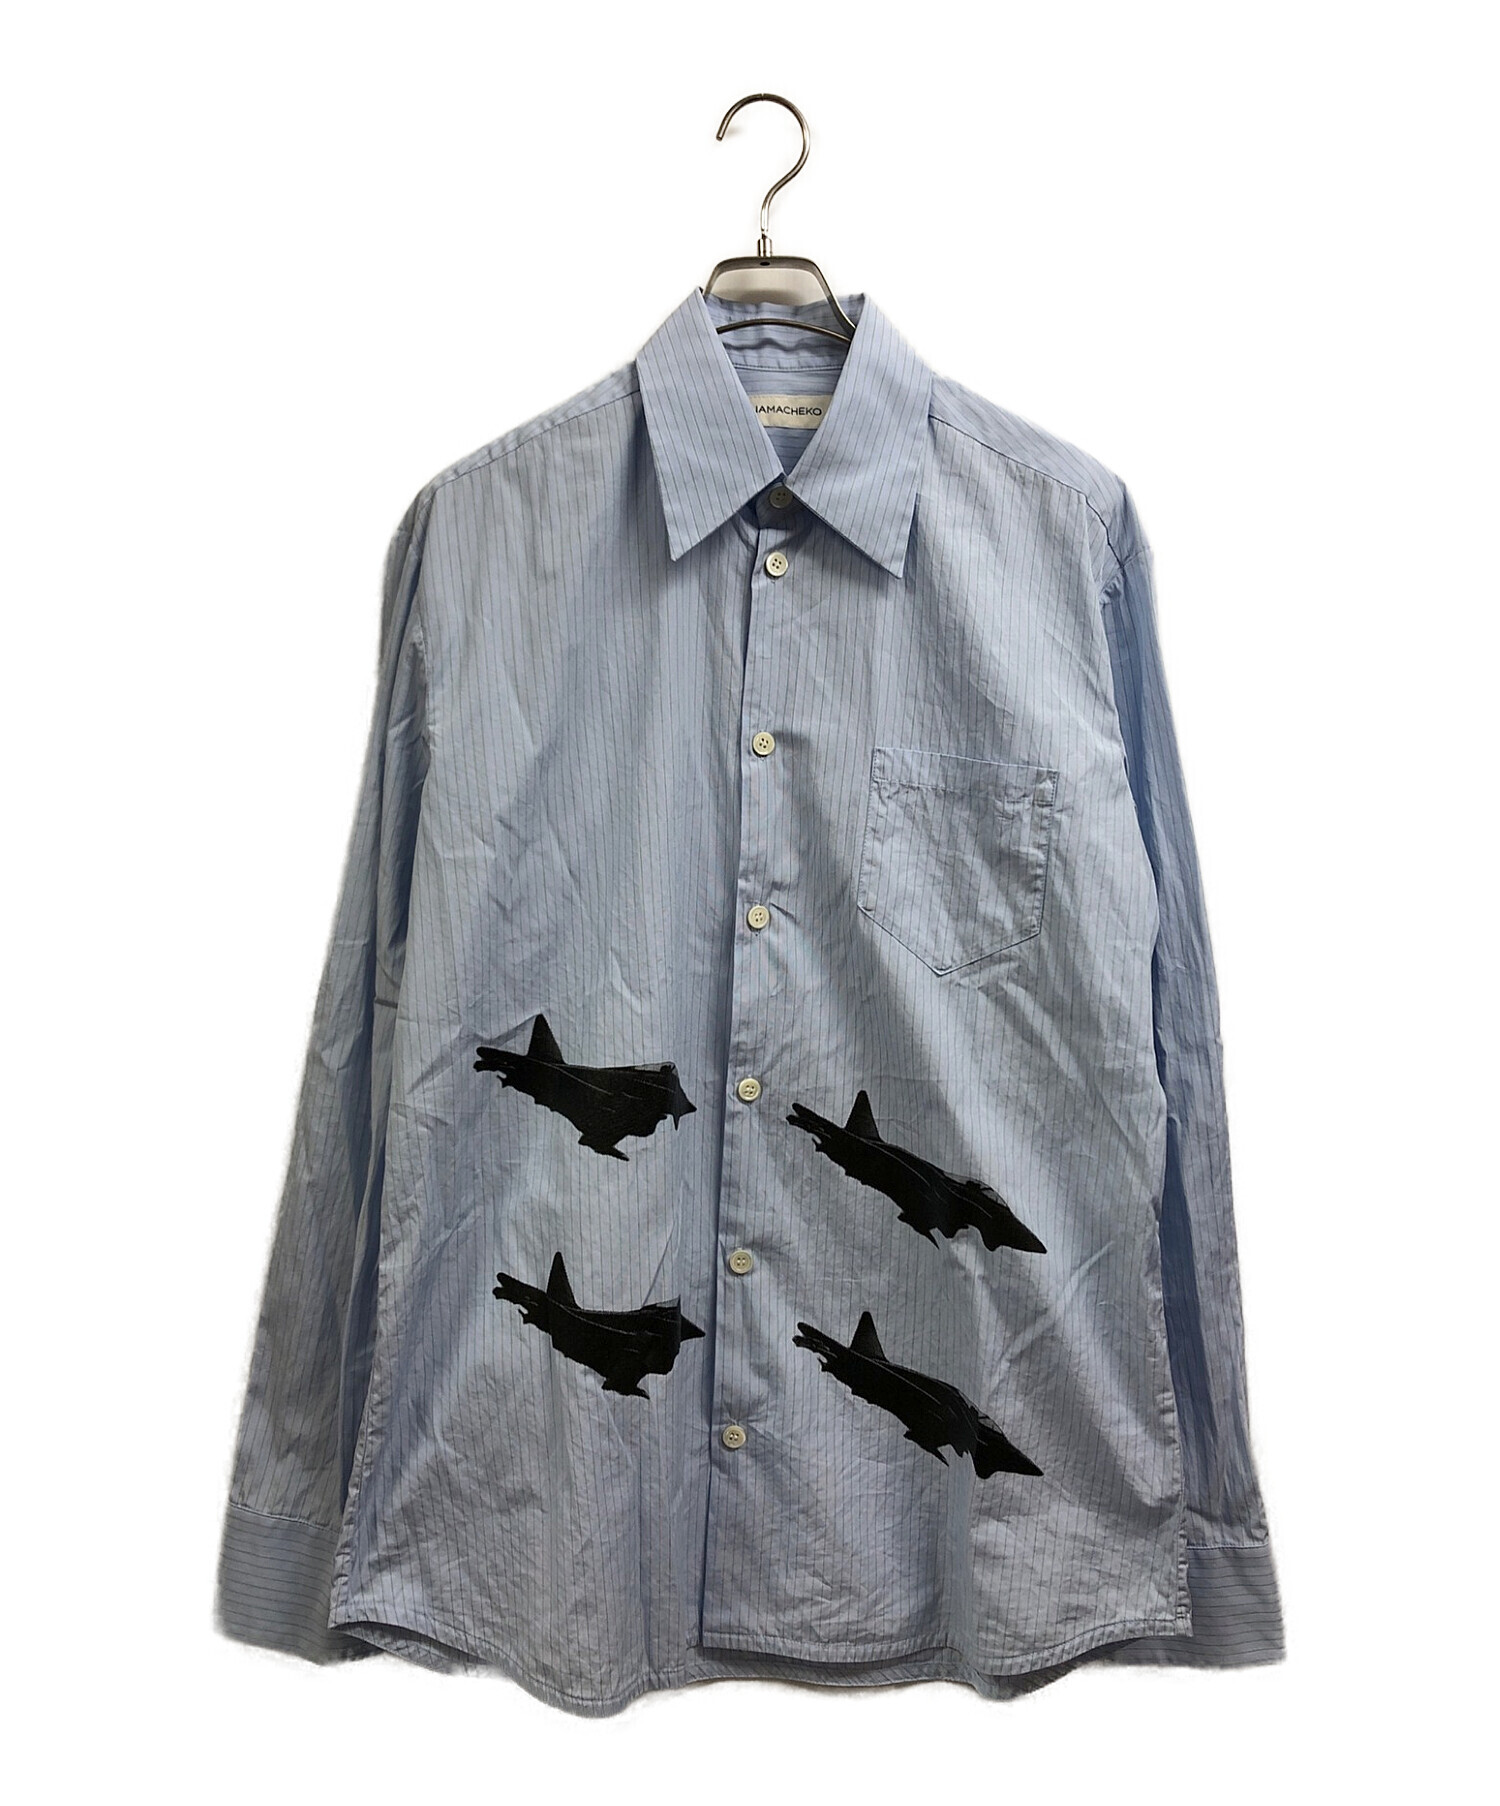 NAMACHEKO (ナマチェコ) Fighter Jet shirt ブルー サイズ:M